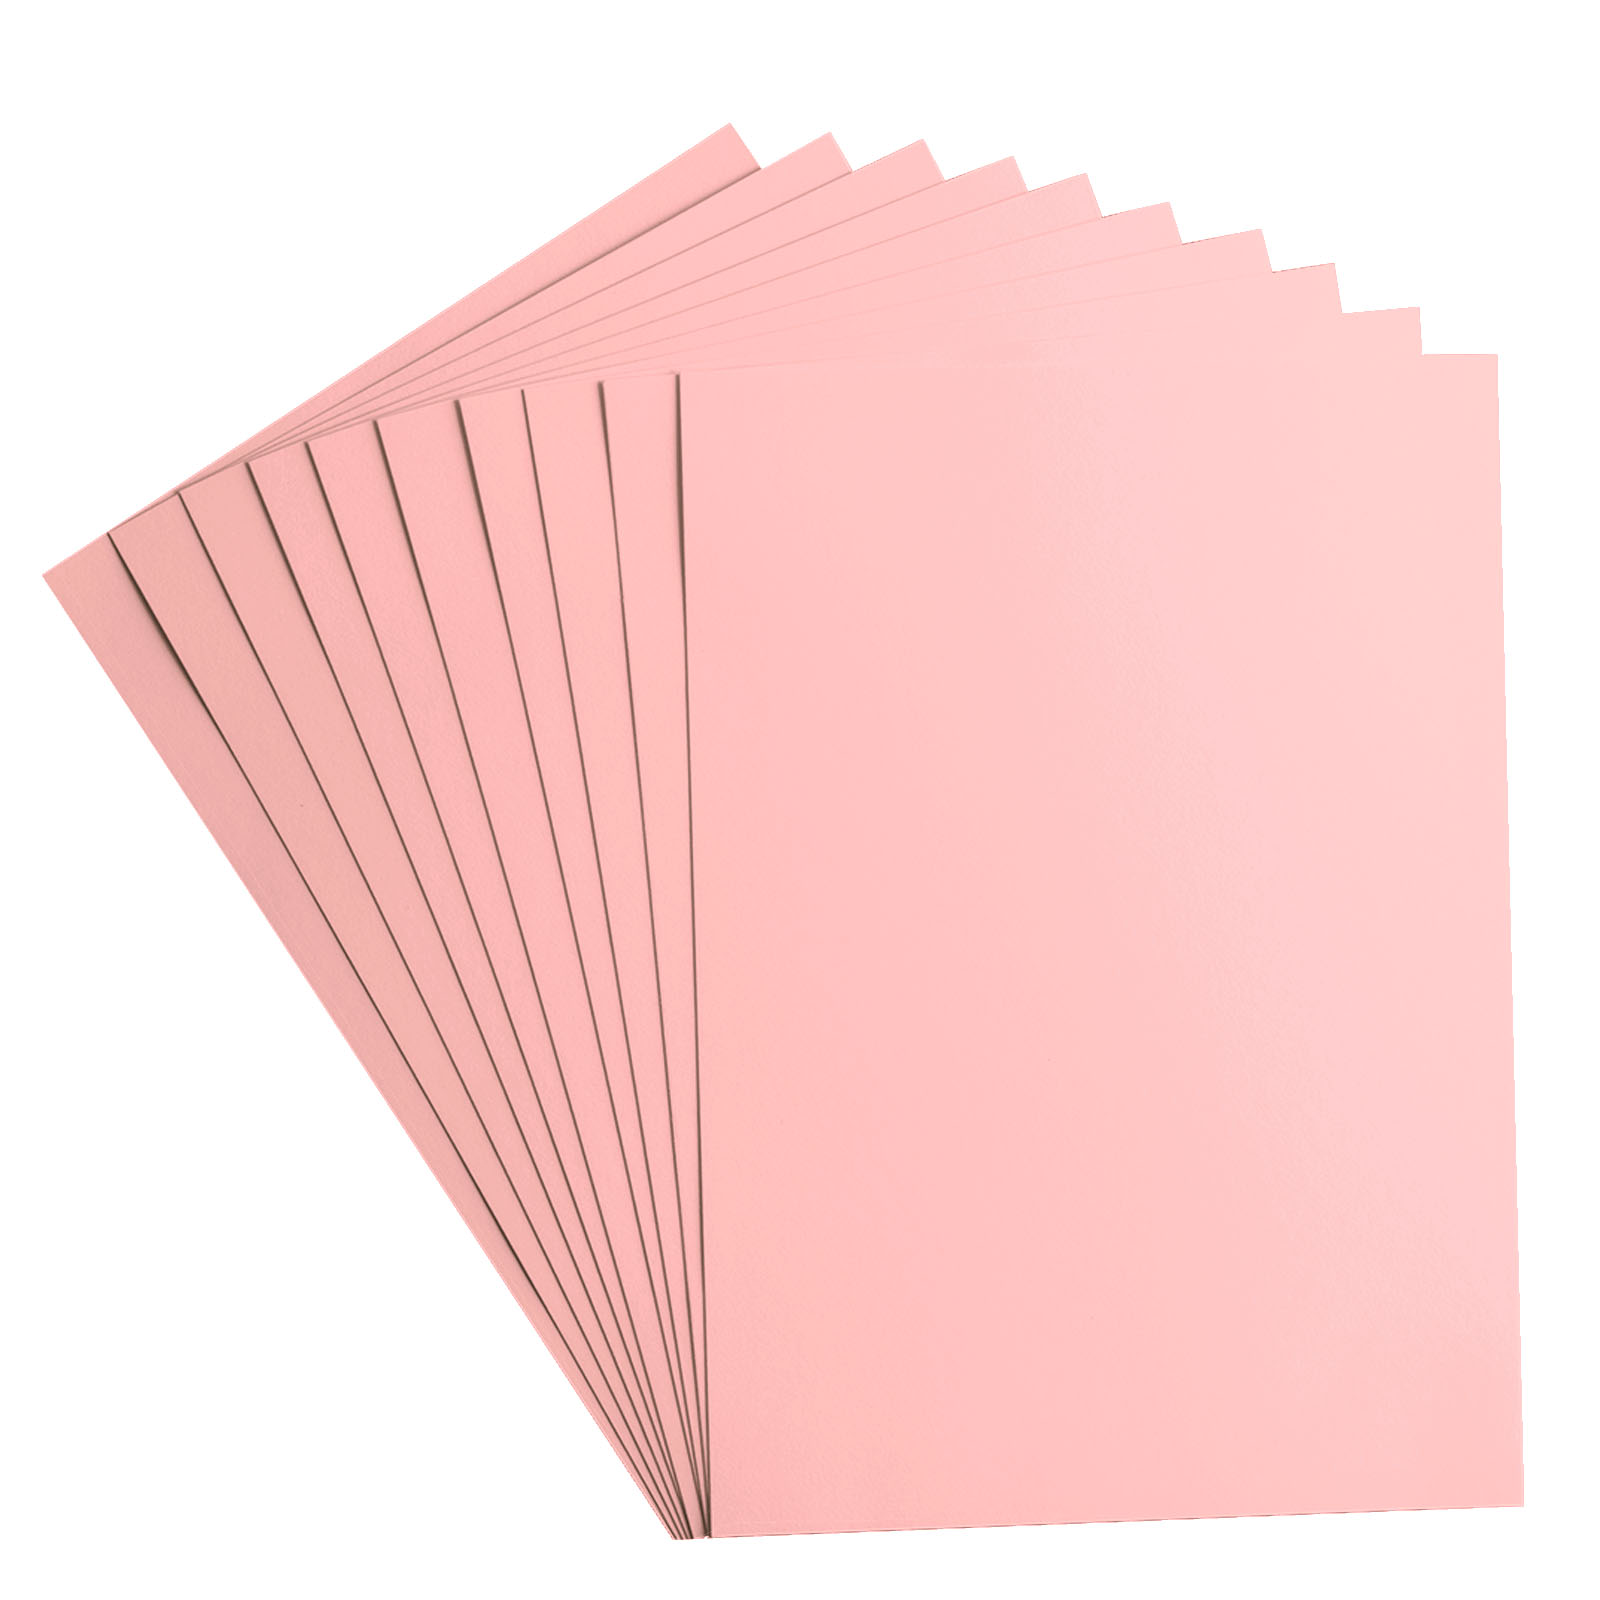 Baby Pink Cardstock Paper